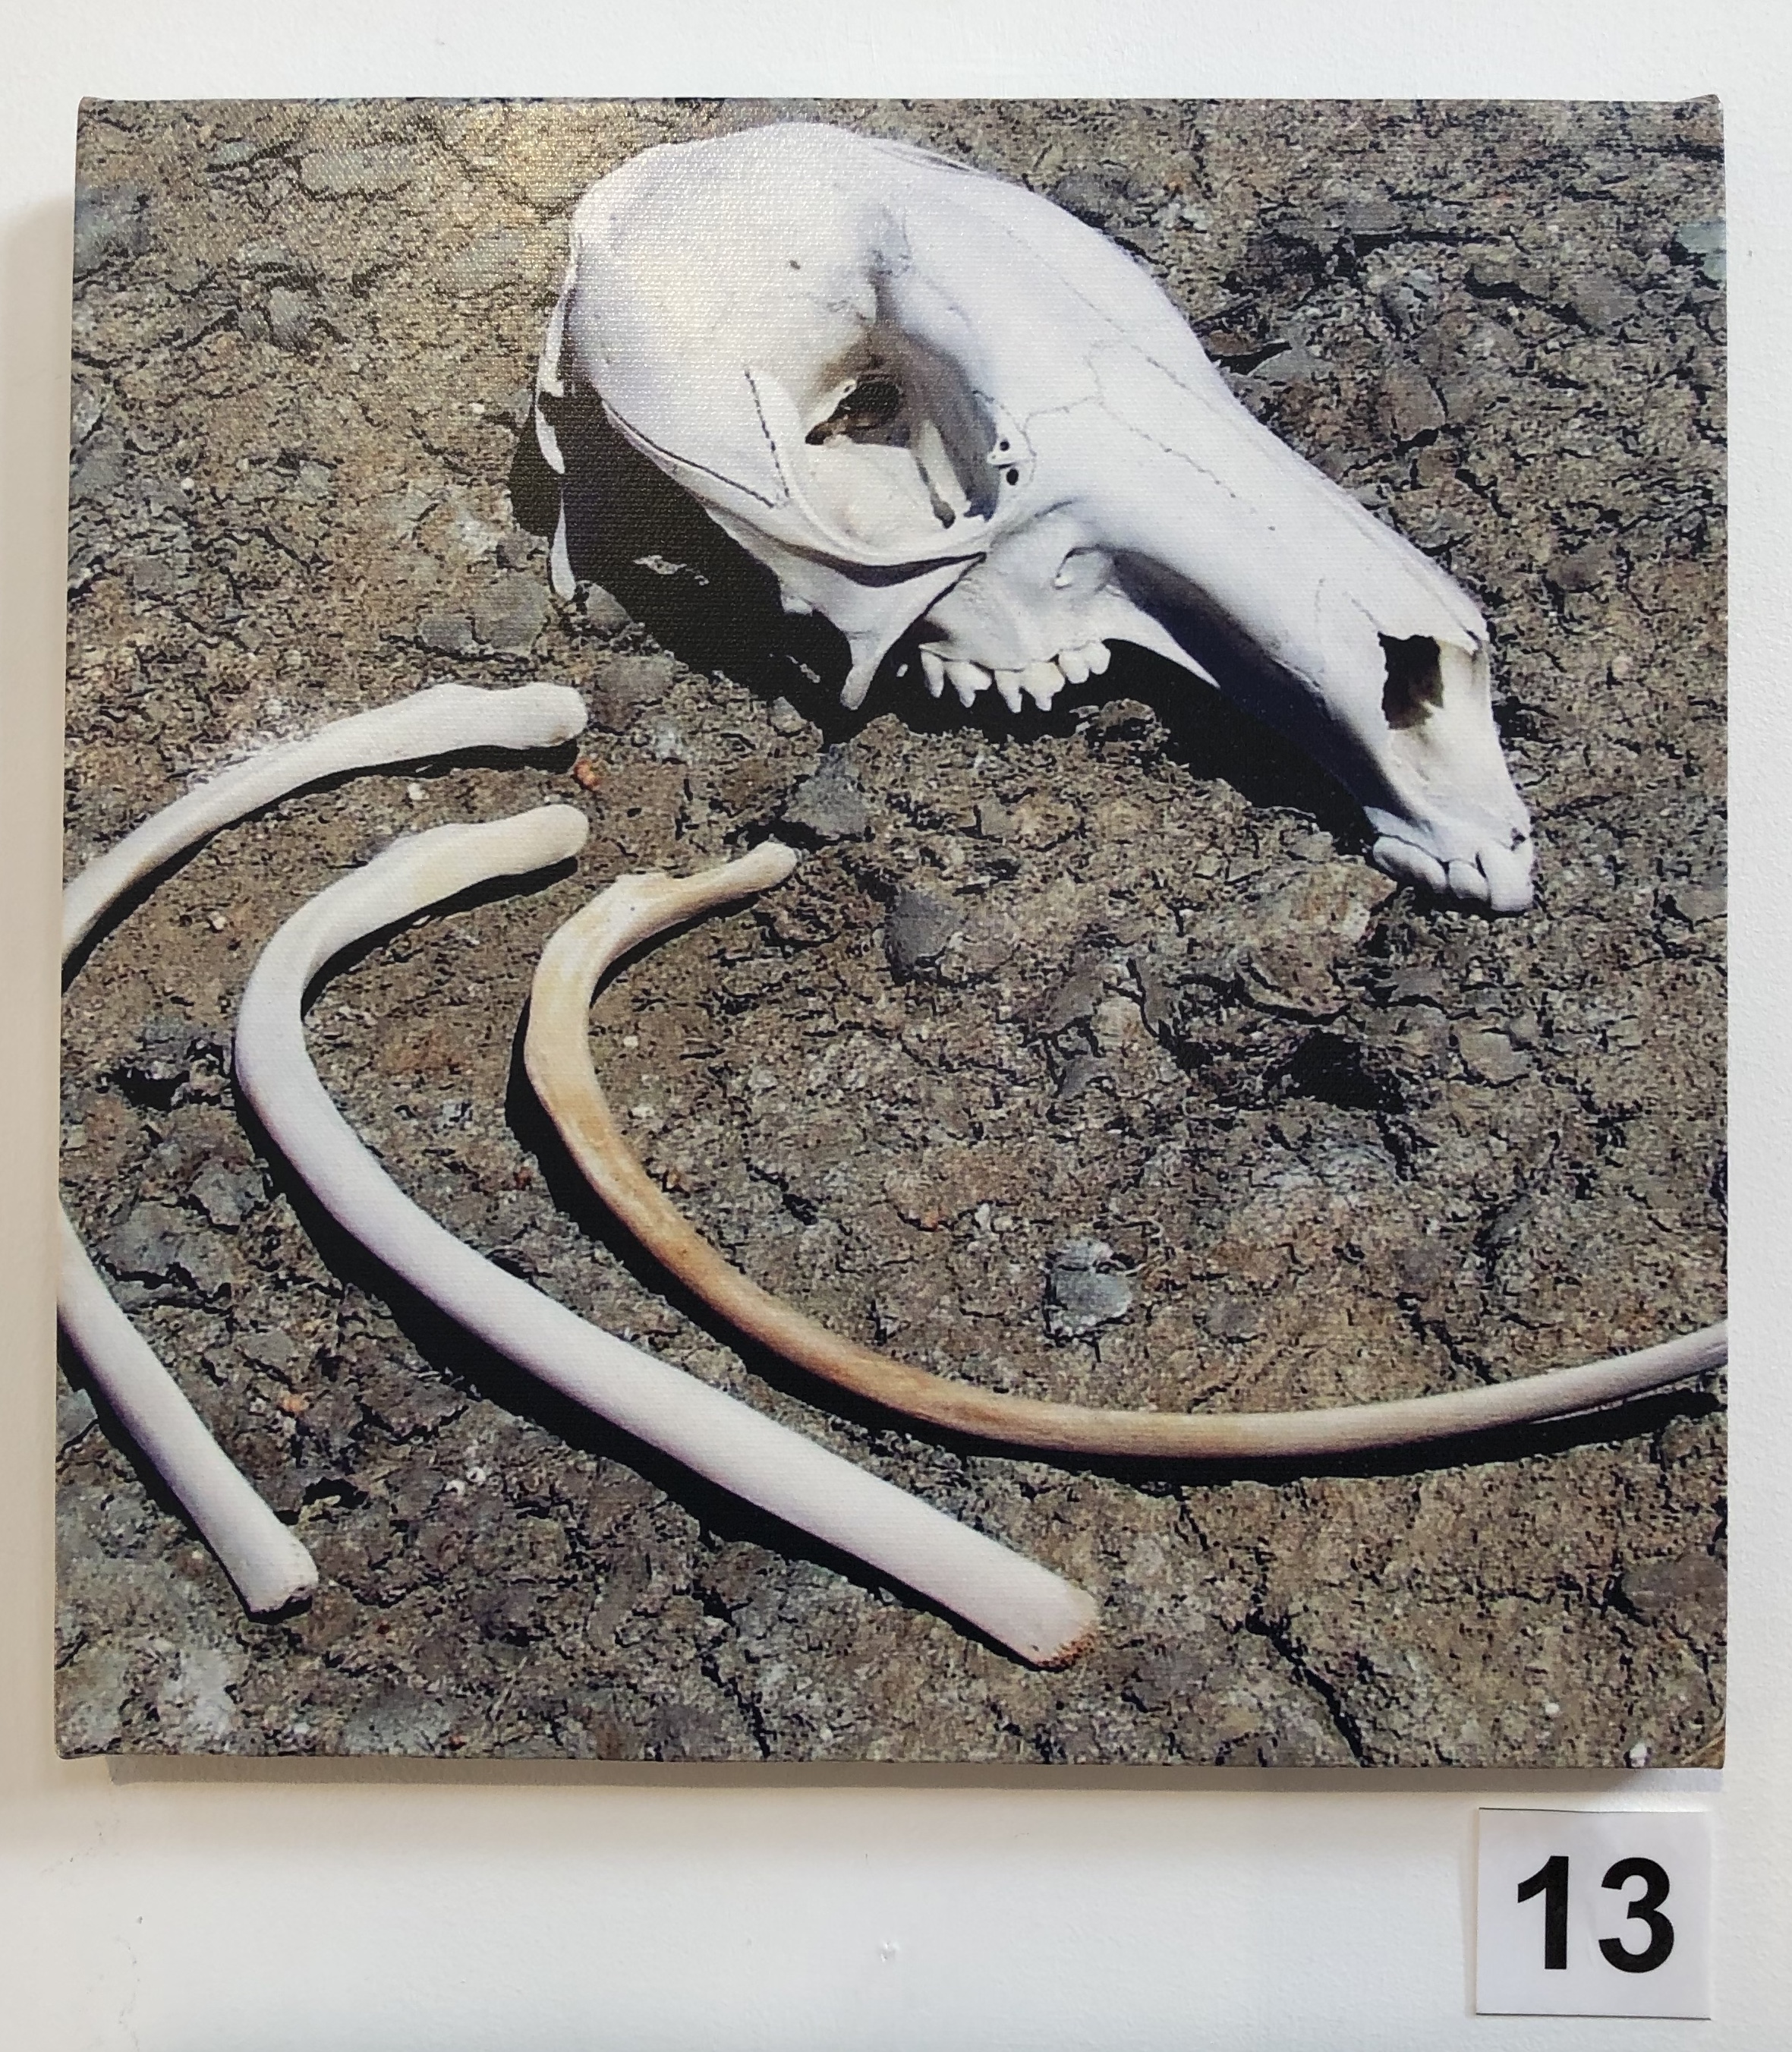 "Skull and Rib Bones - Kangaroo" by Lisa Timms Stevens